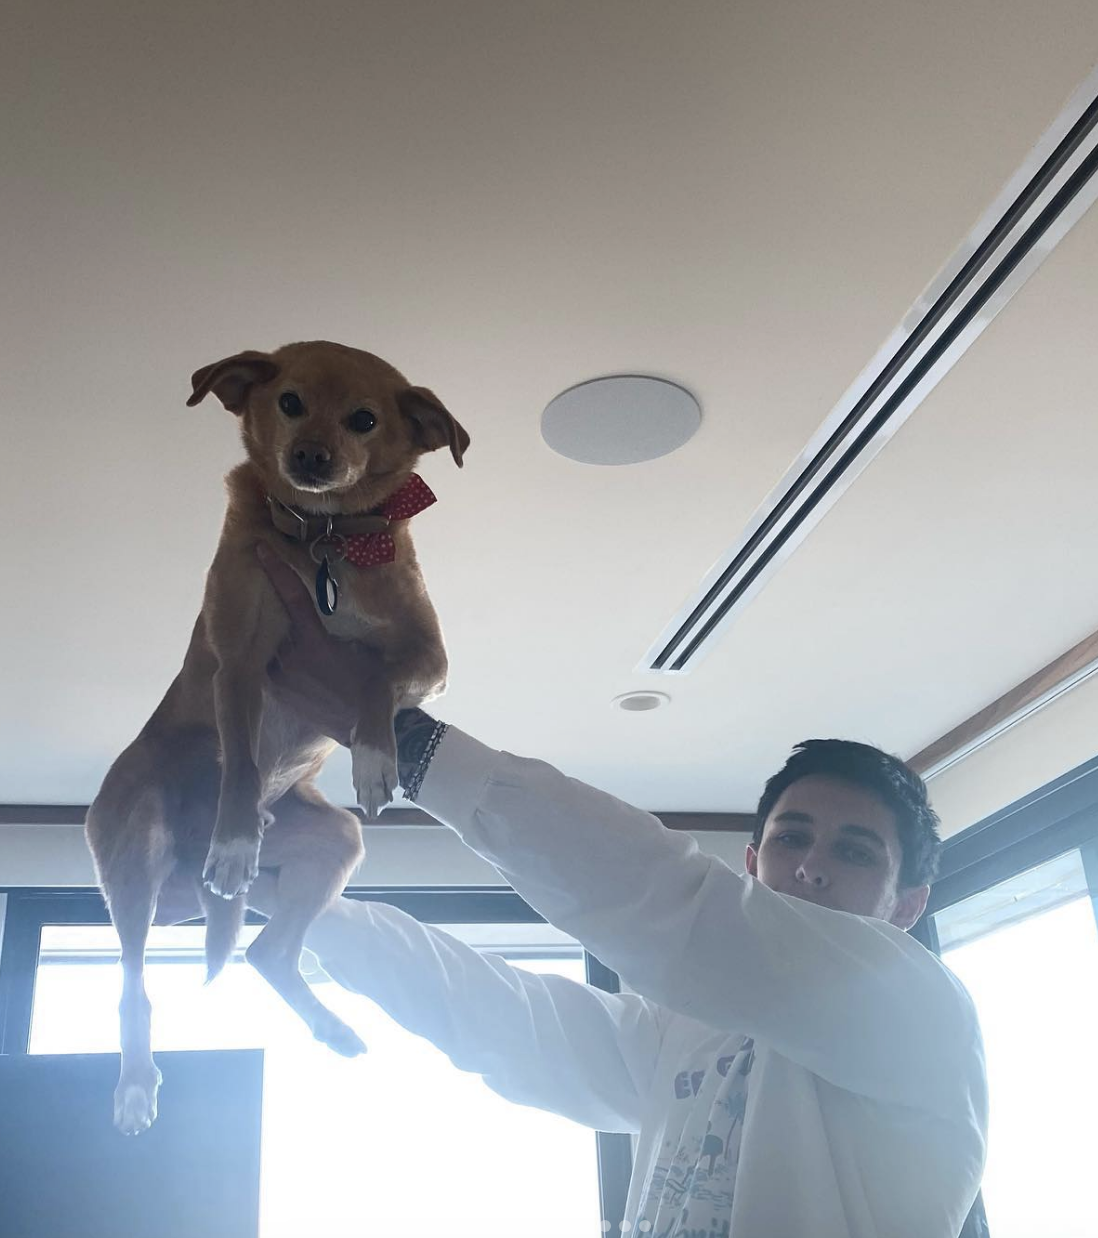 Dalton holding a dog in the air